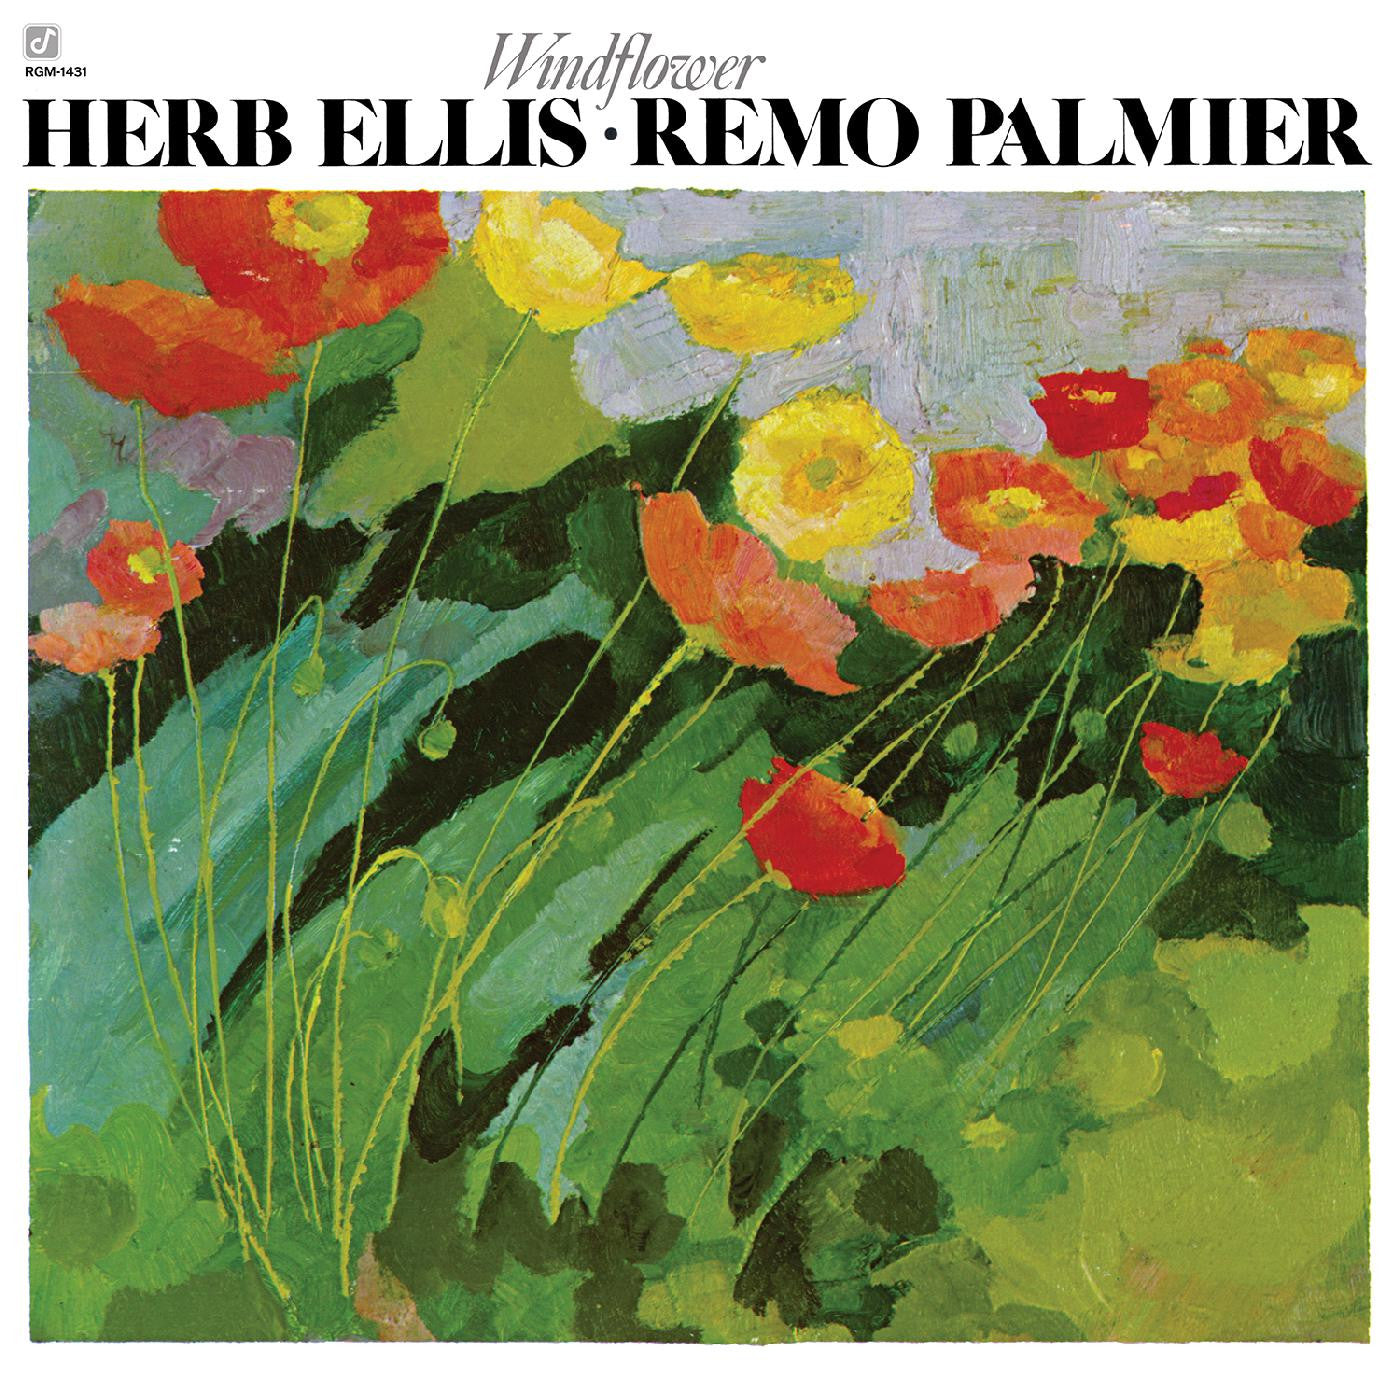 Herb Ellis & Remo Palmier - Windflower [Emerald Green Vinyl]